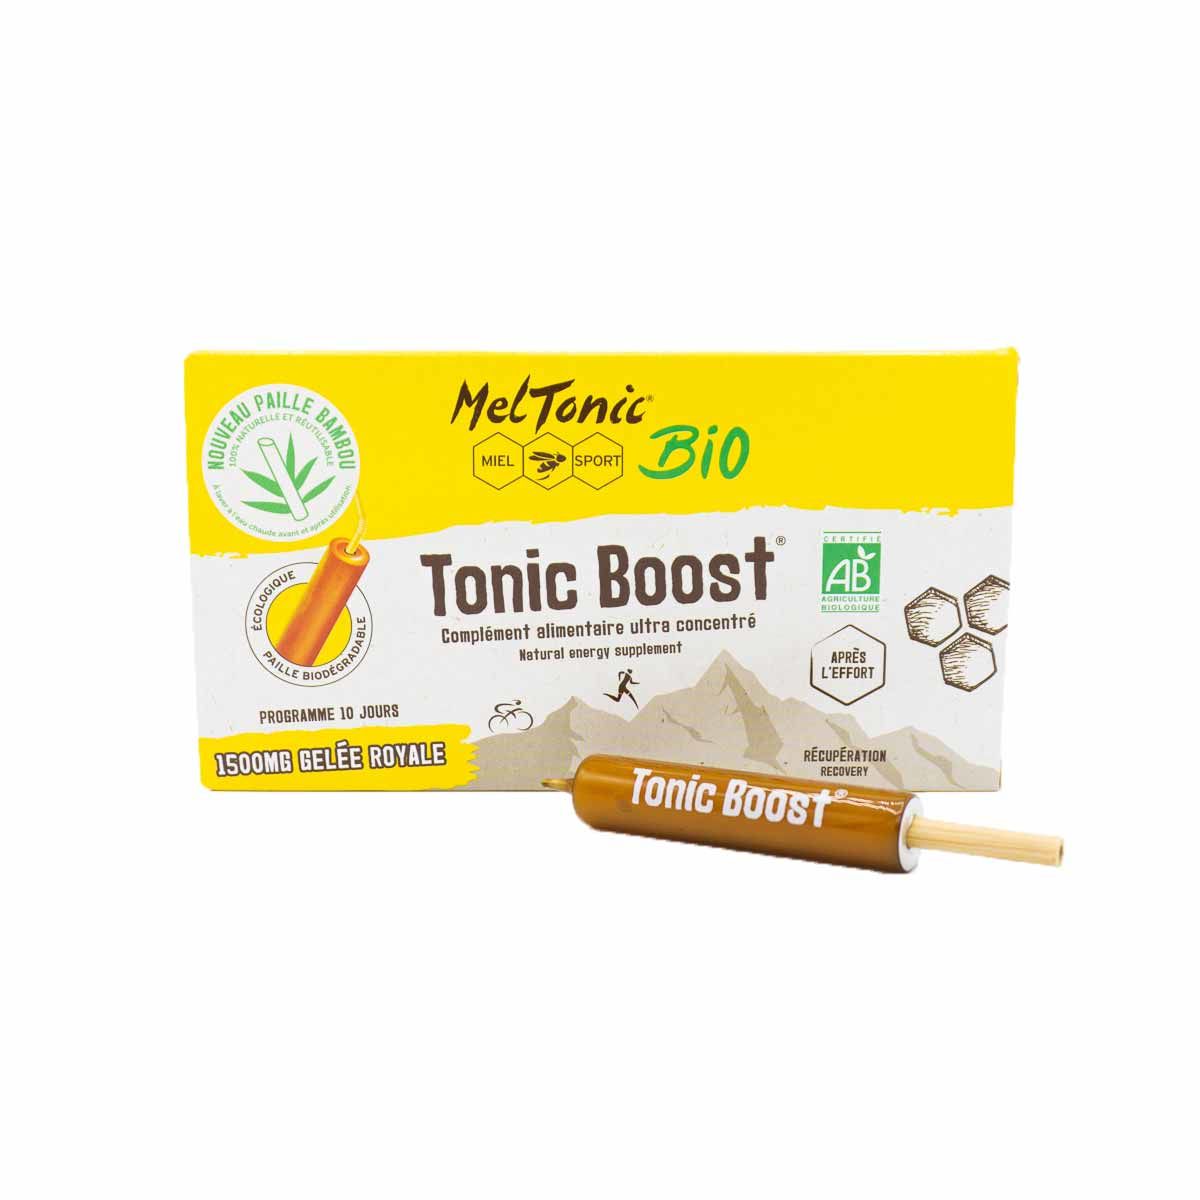 Meltonic Tonic Boost - Honey, green propolis and royal jelly